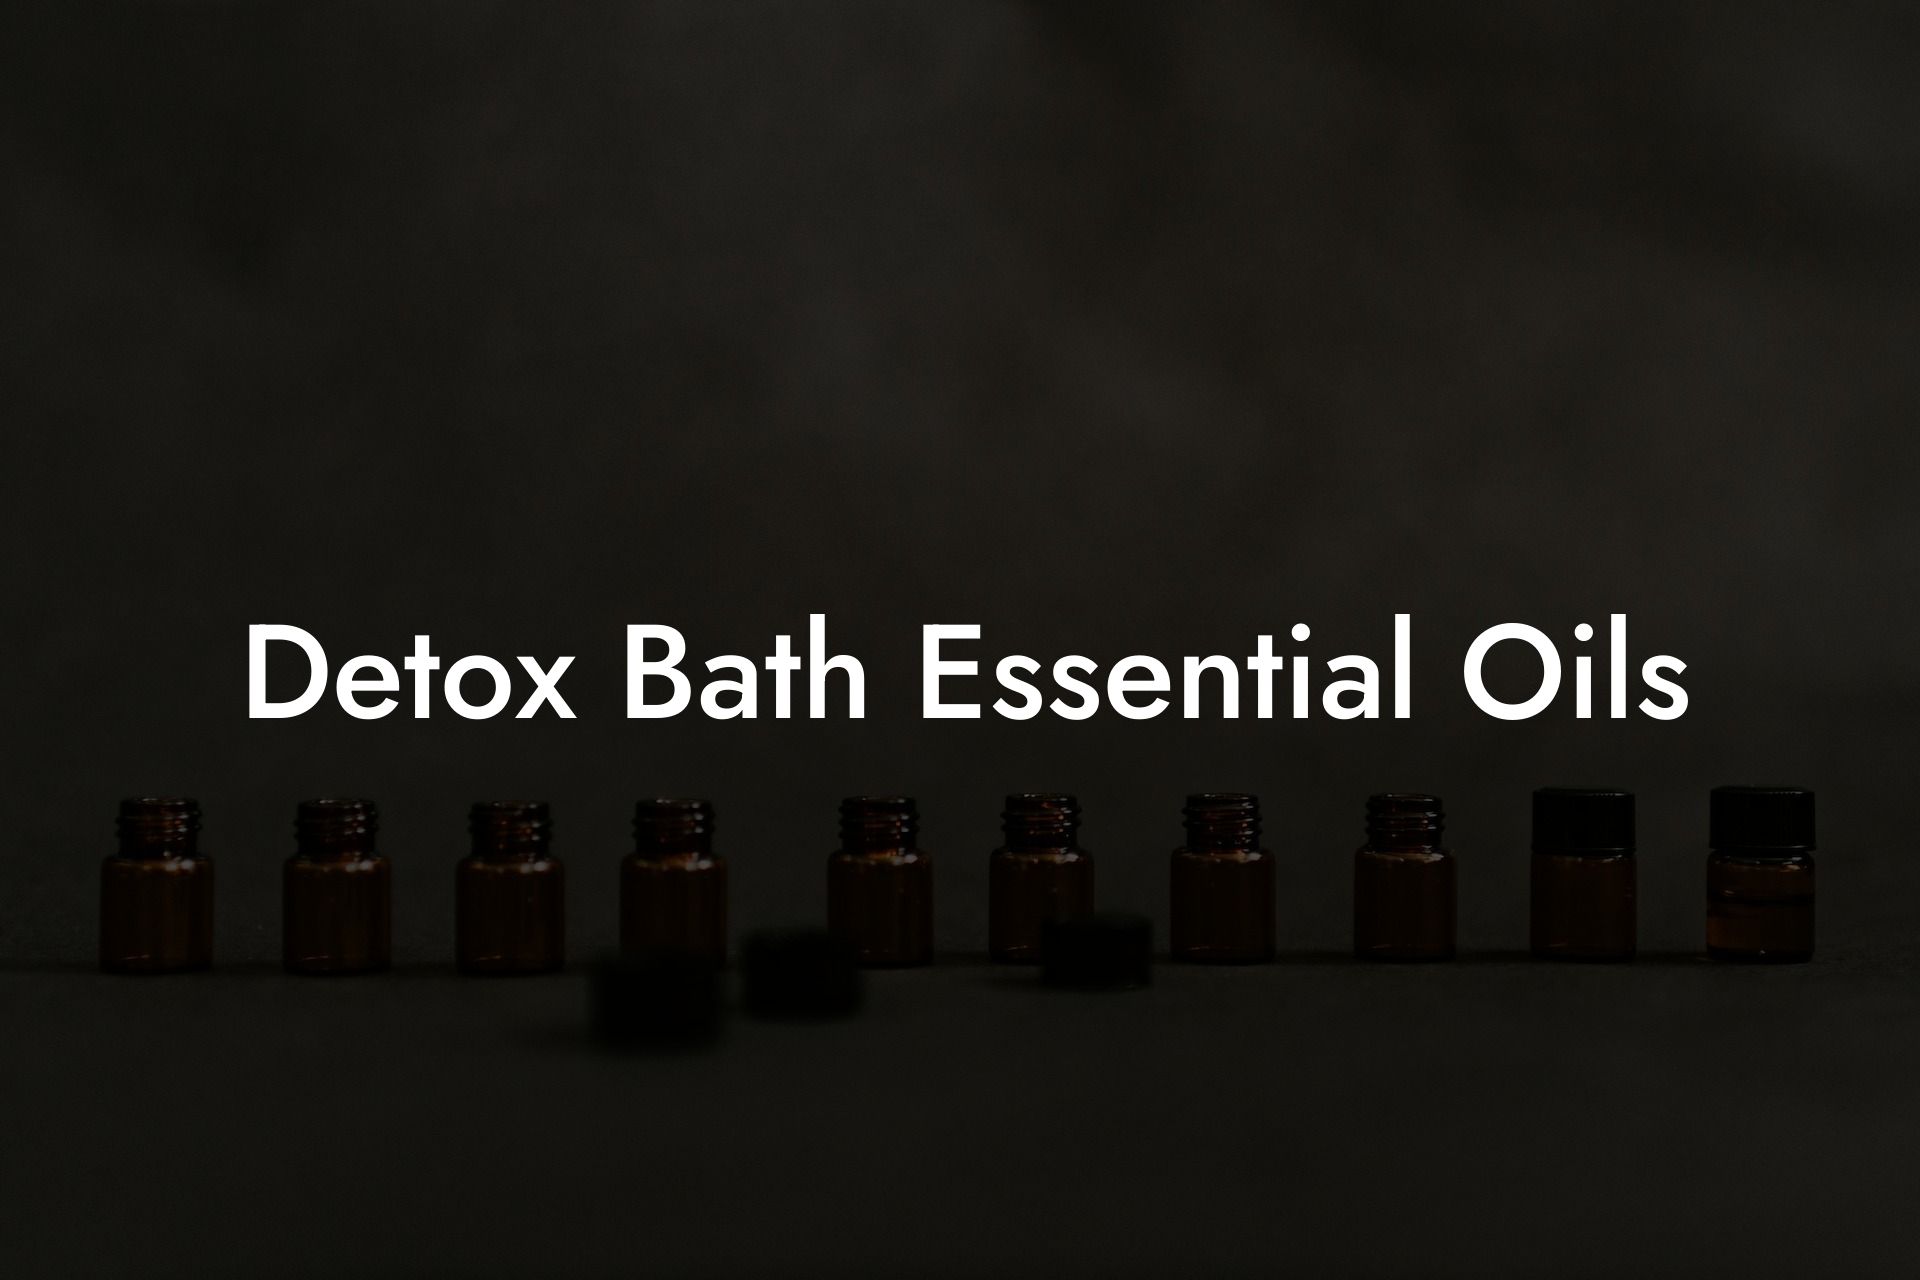 Detox Bath Essential Oils